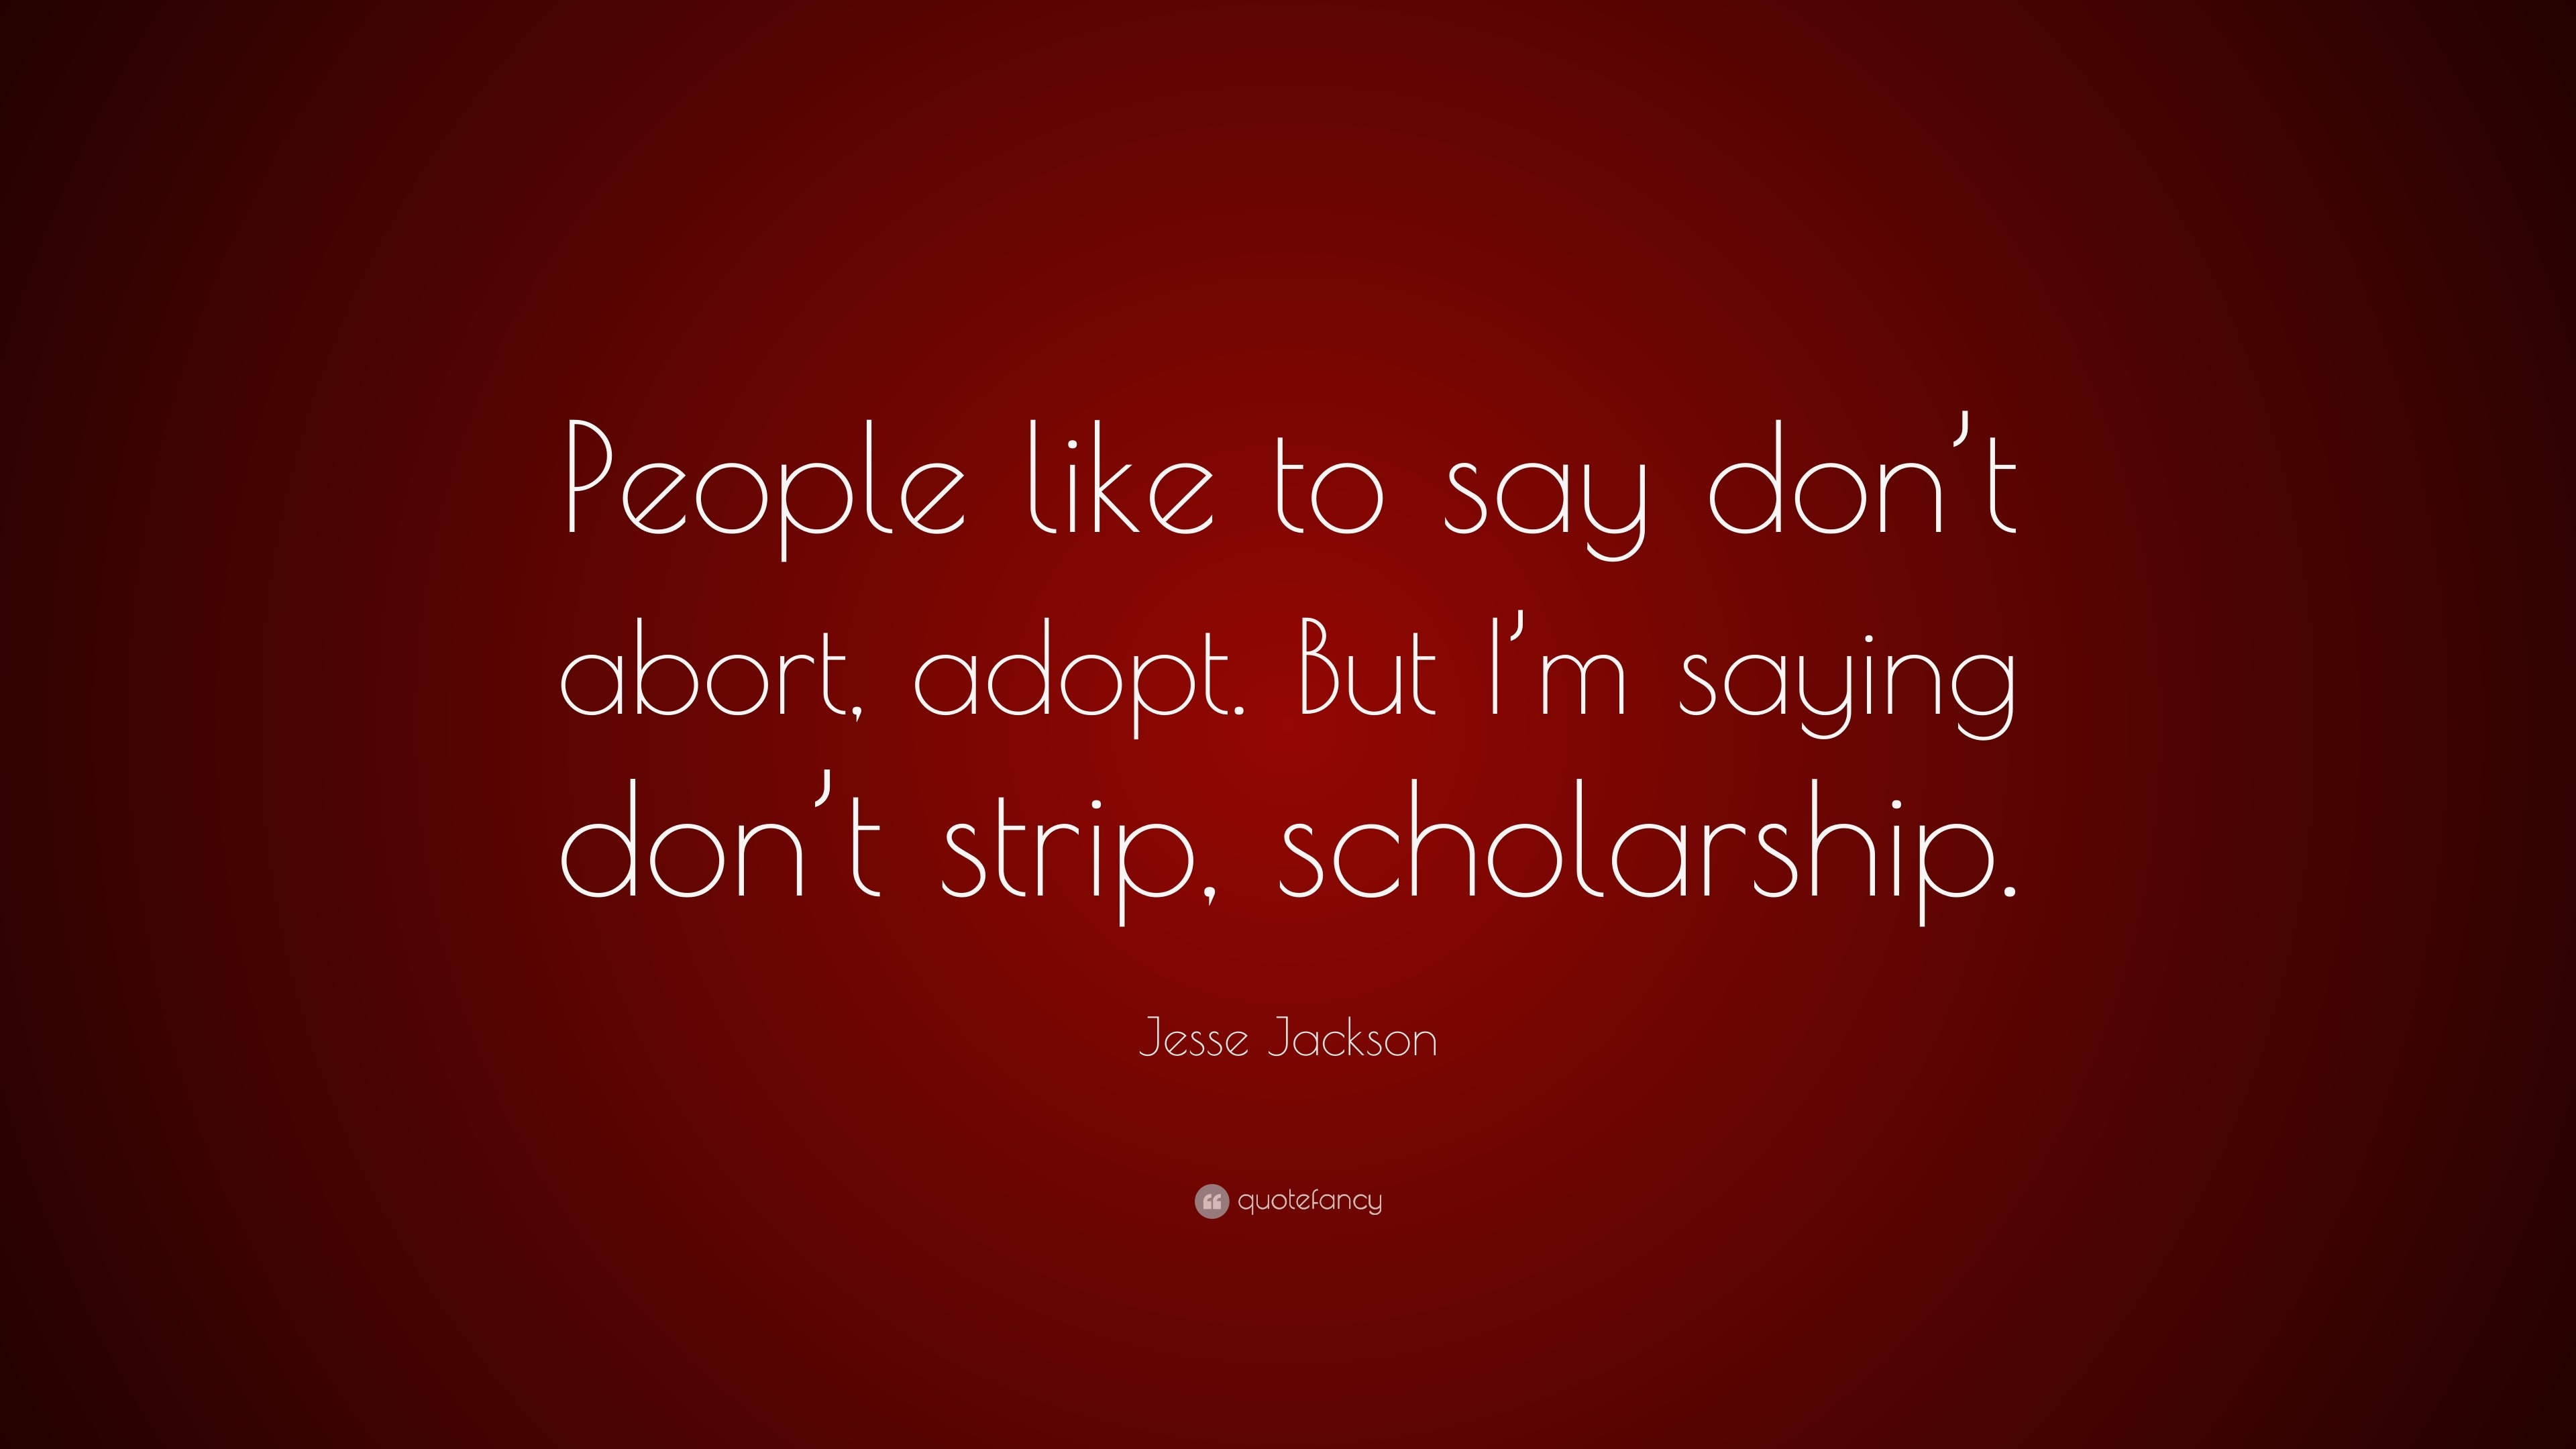 Funny jesse jackson quotes